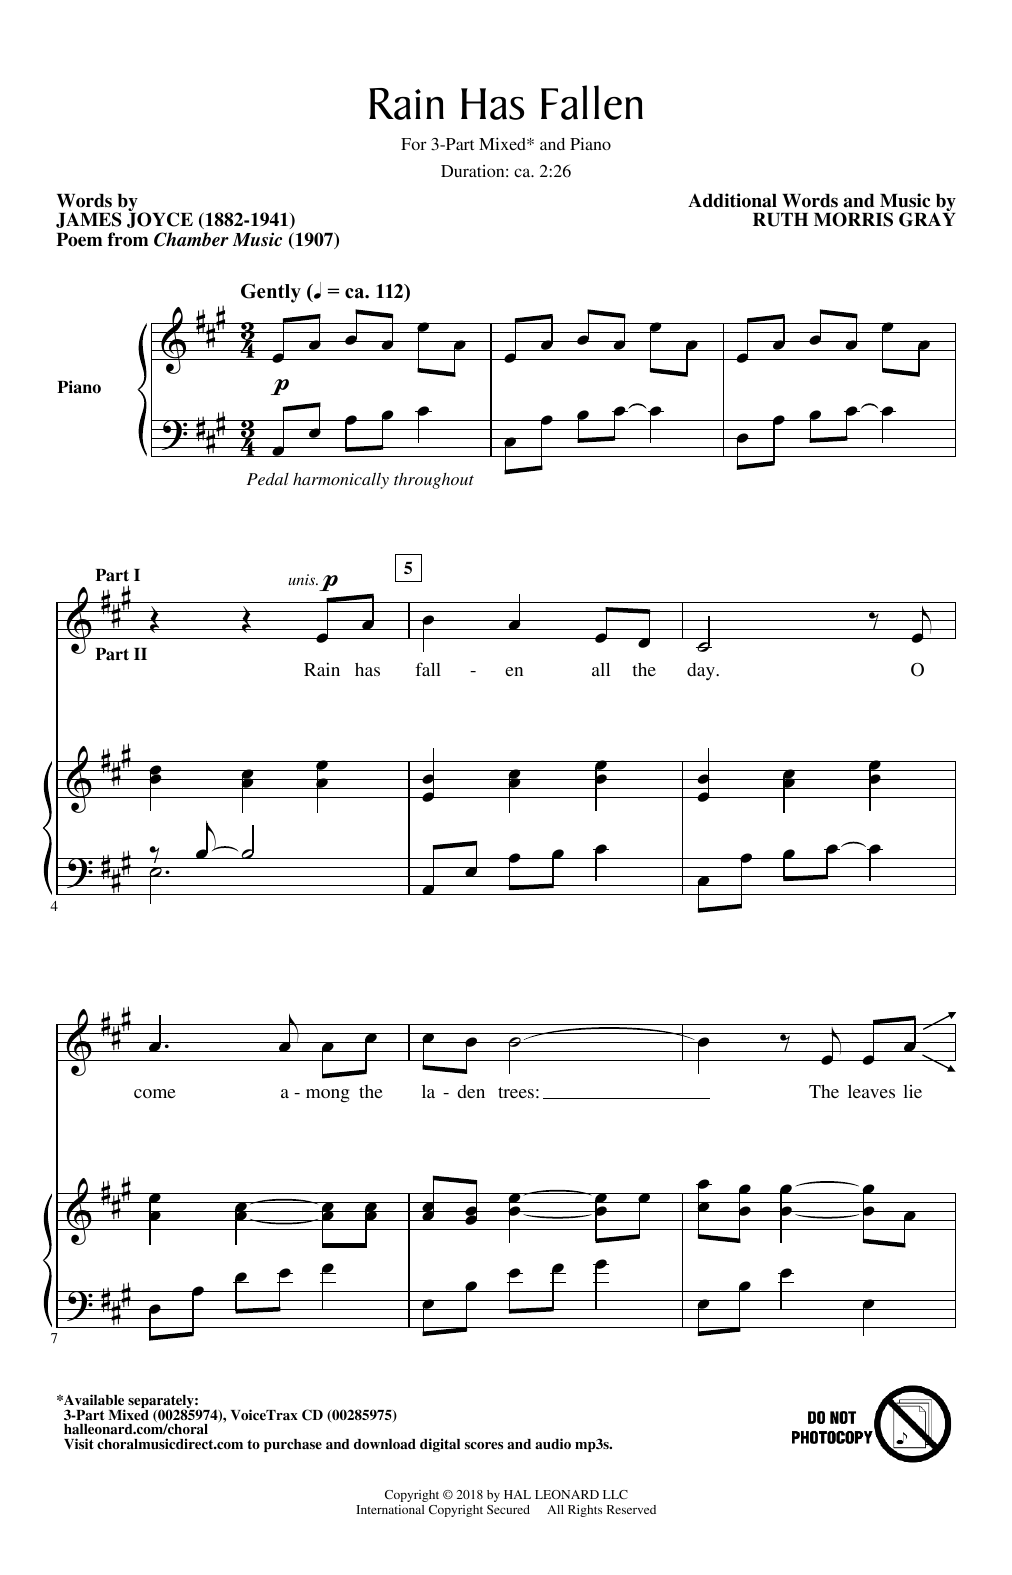 Ruth Morris Gray Rain Has Fallen Sheet Music Notes & Chords for 3-Part Mixed Choir - Download or Print PDF